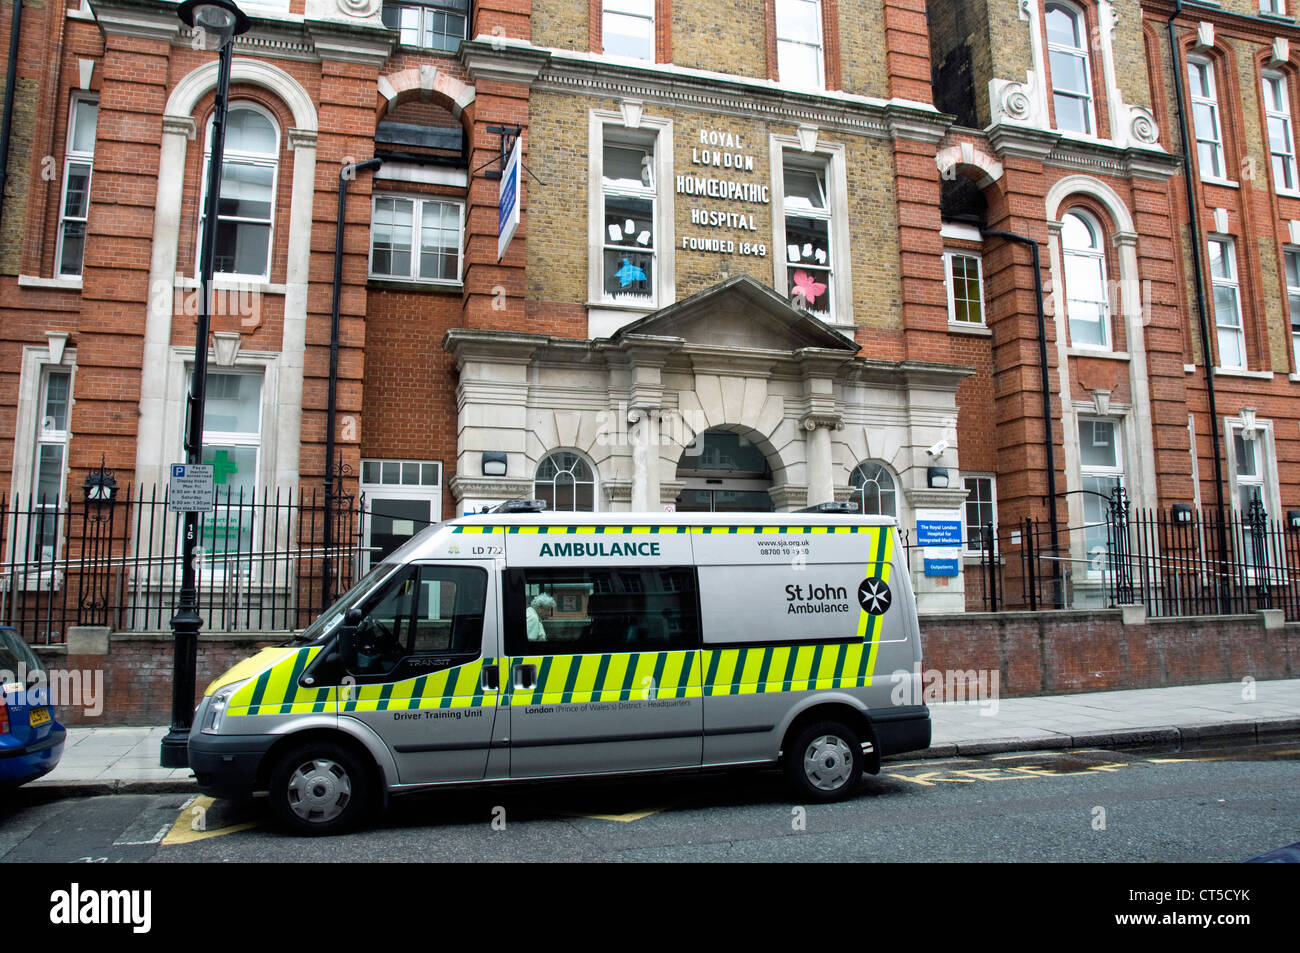 St John Ambulance vehicle outside the Royal London Homoeopathic Hospital Bloomsbury London England UK Stock Photo